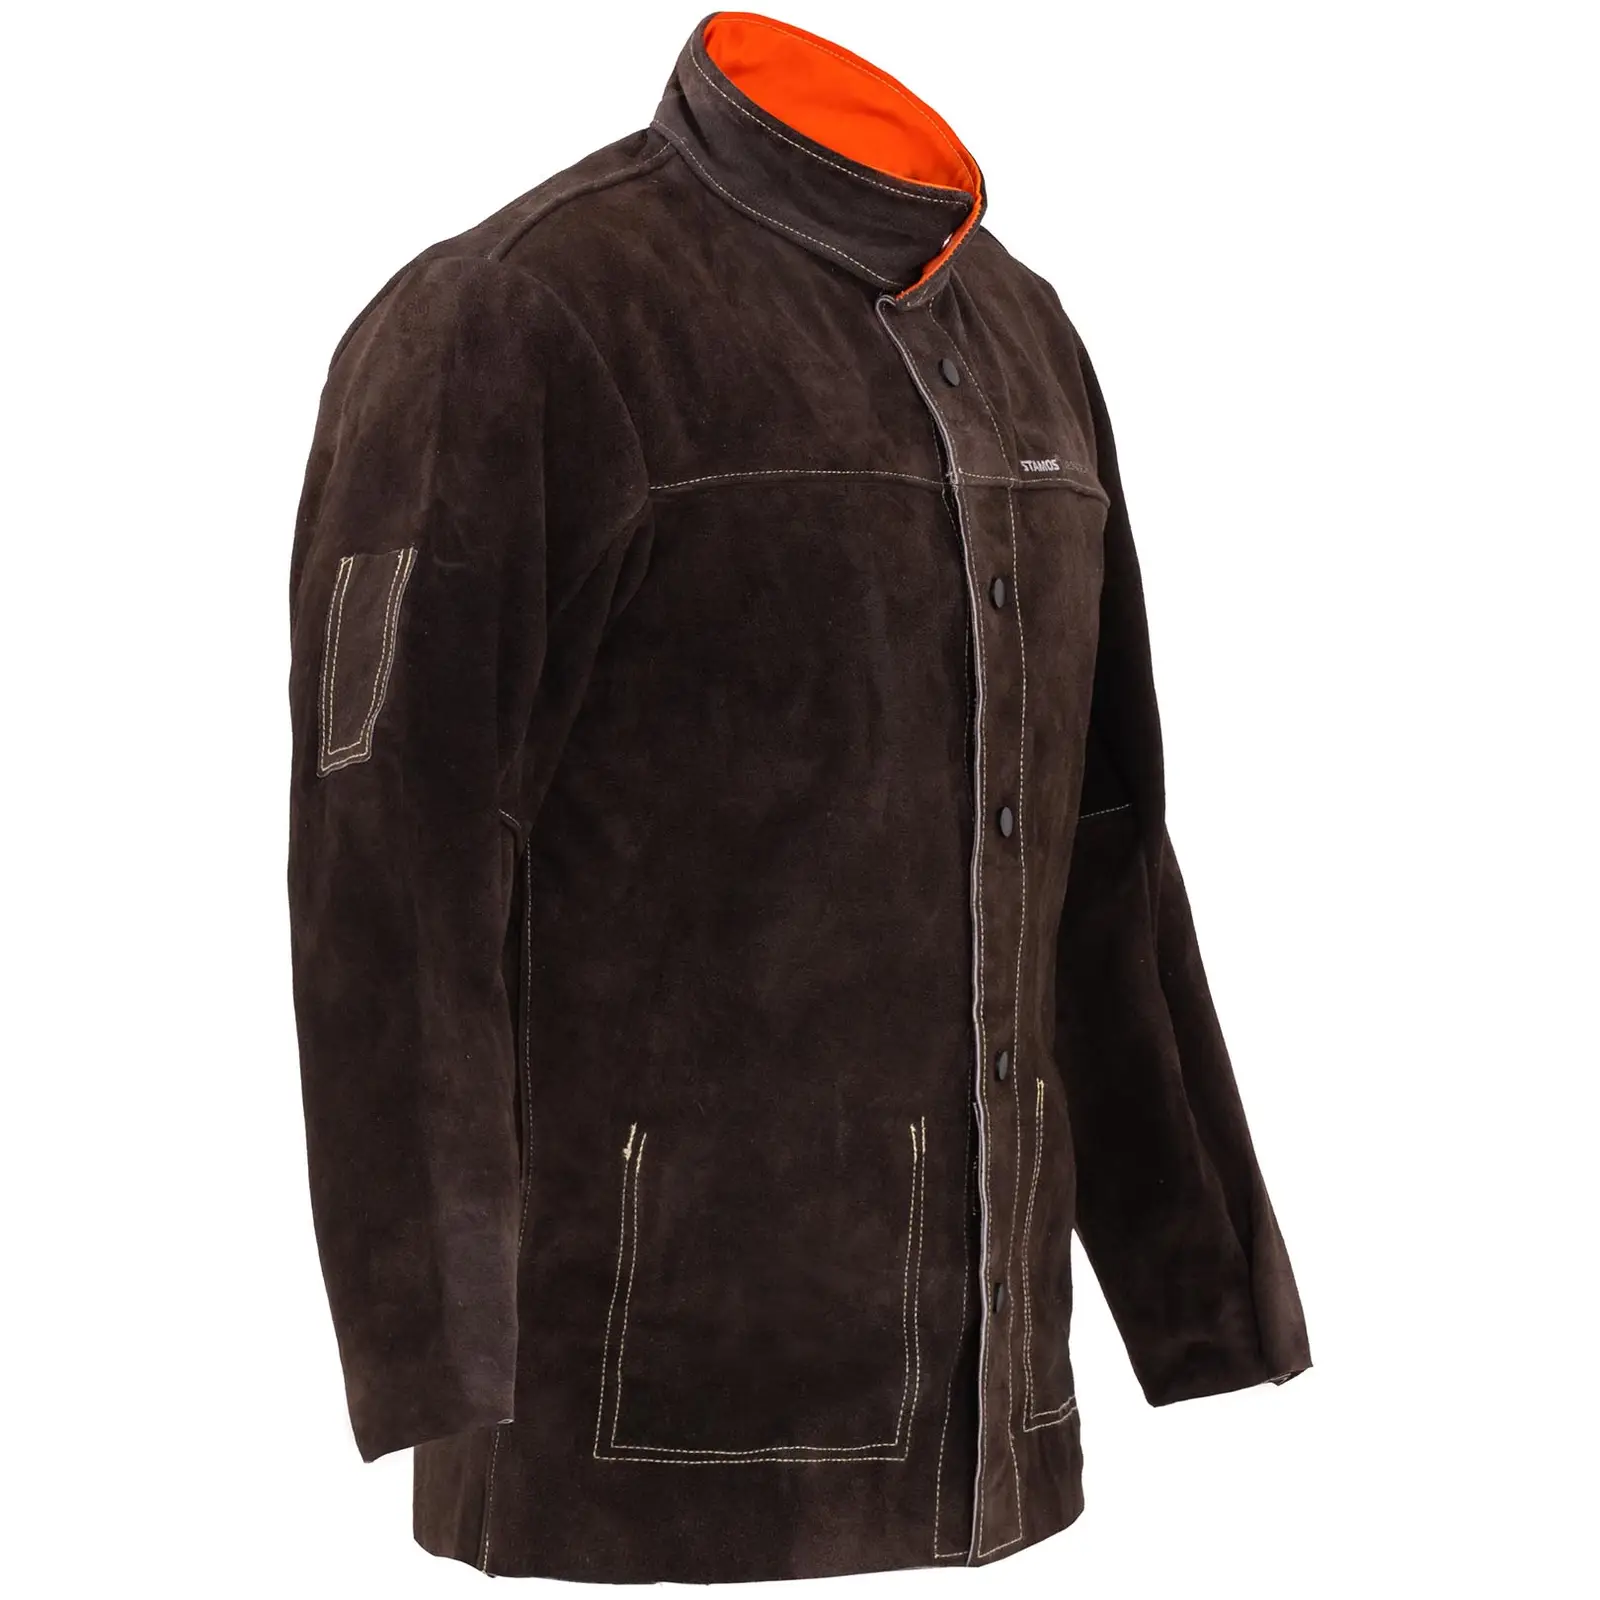 Cow Split Leather Welding Jacket - size M